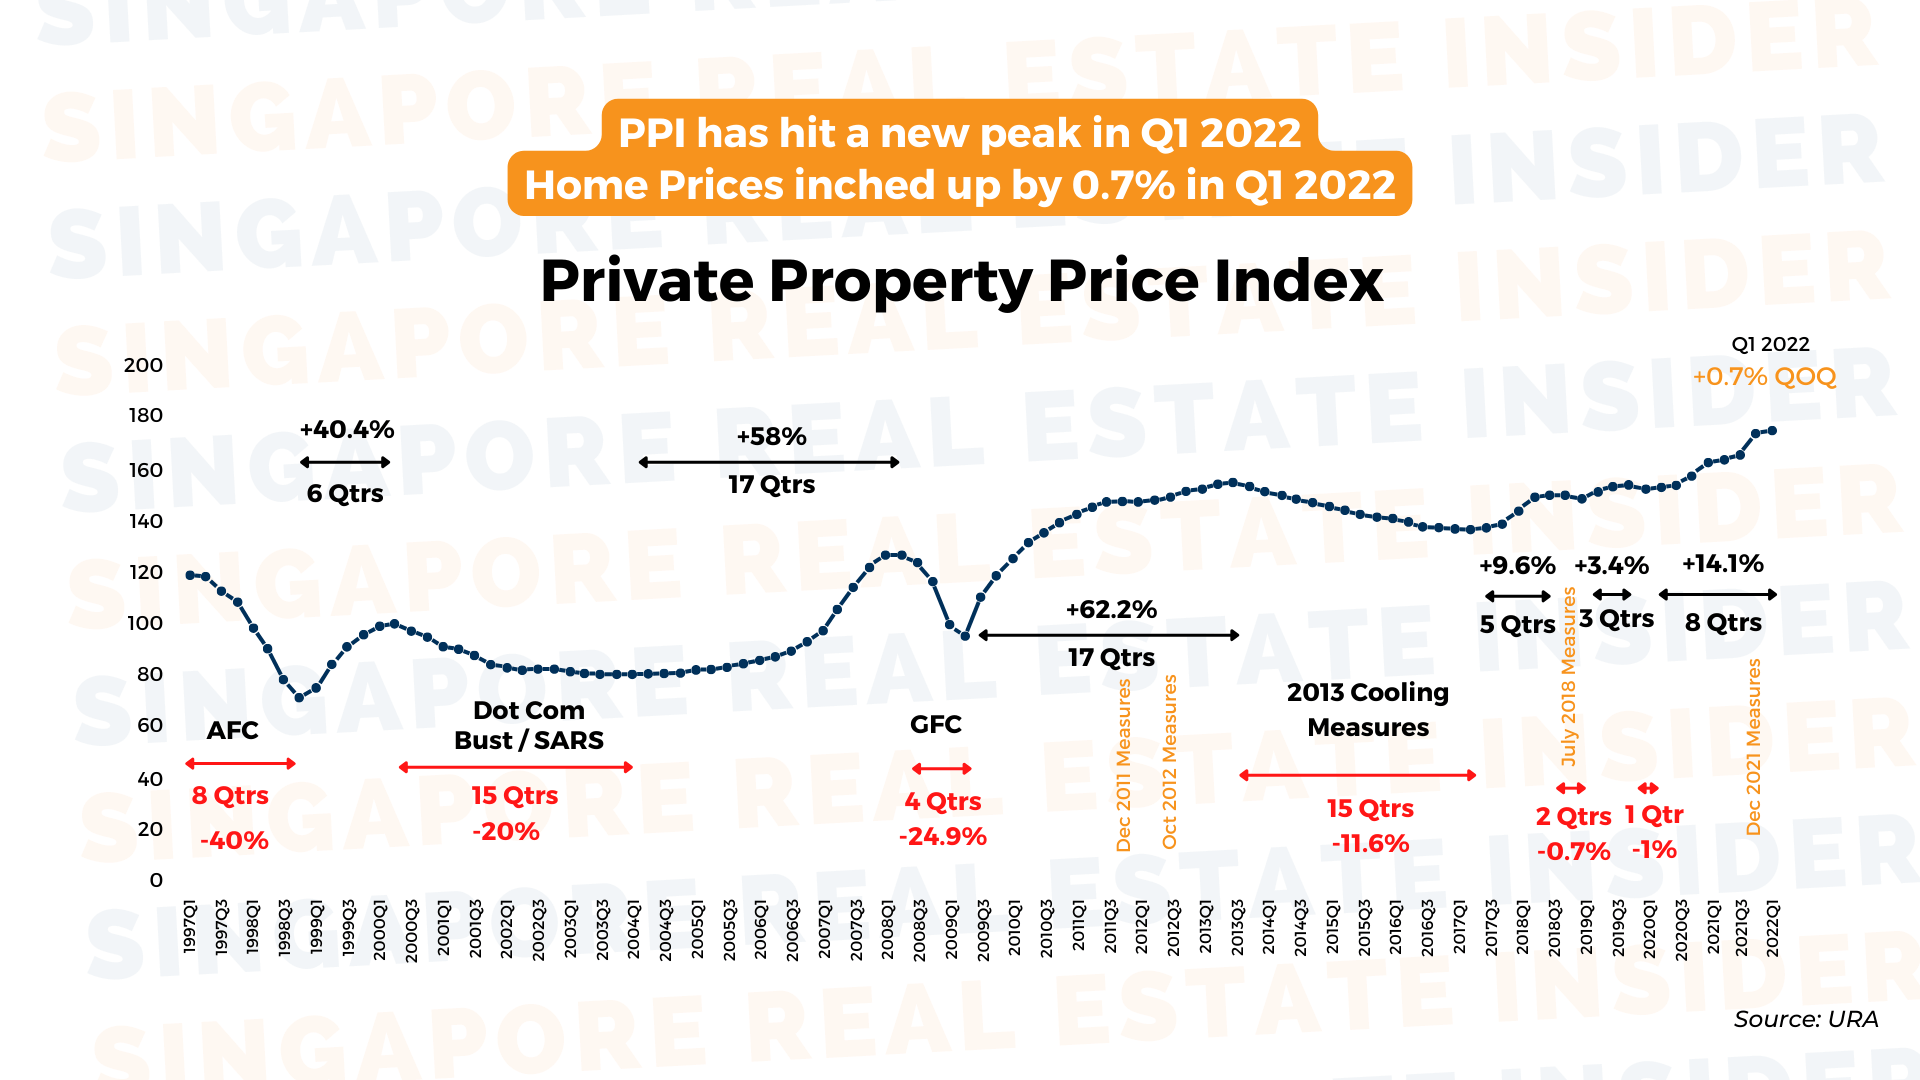 Private Property Price Index